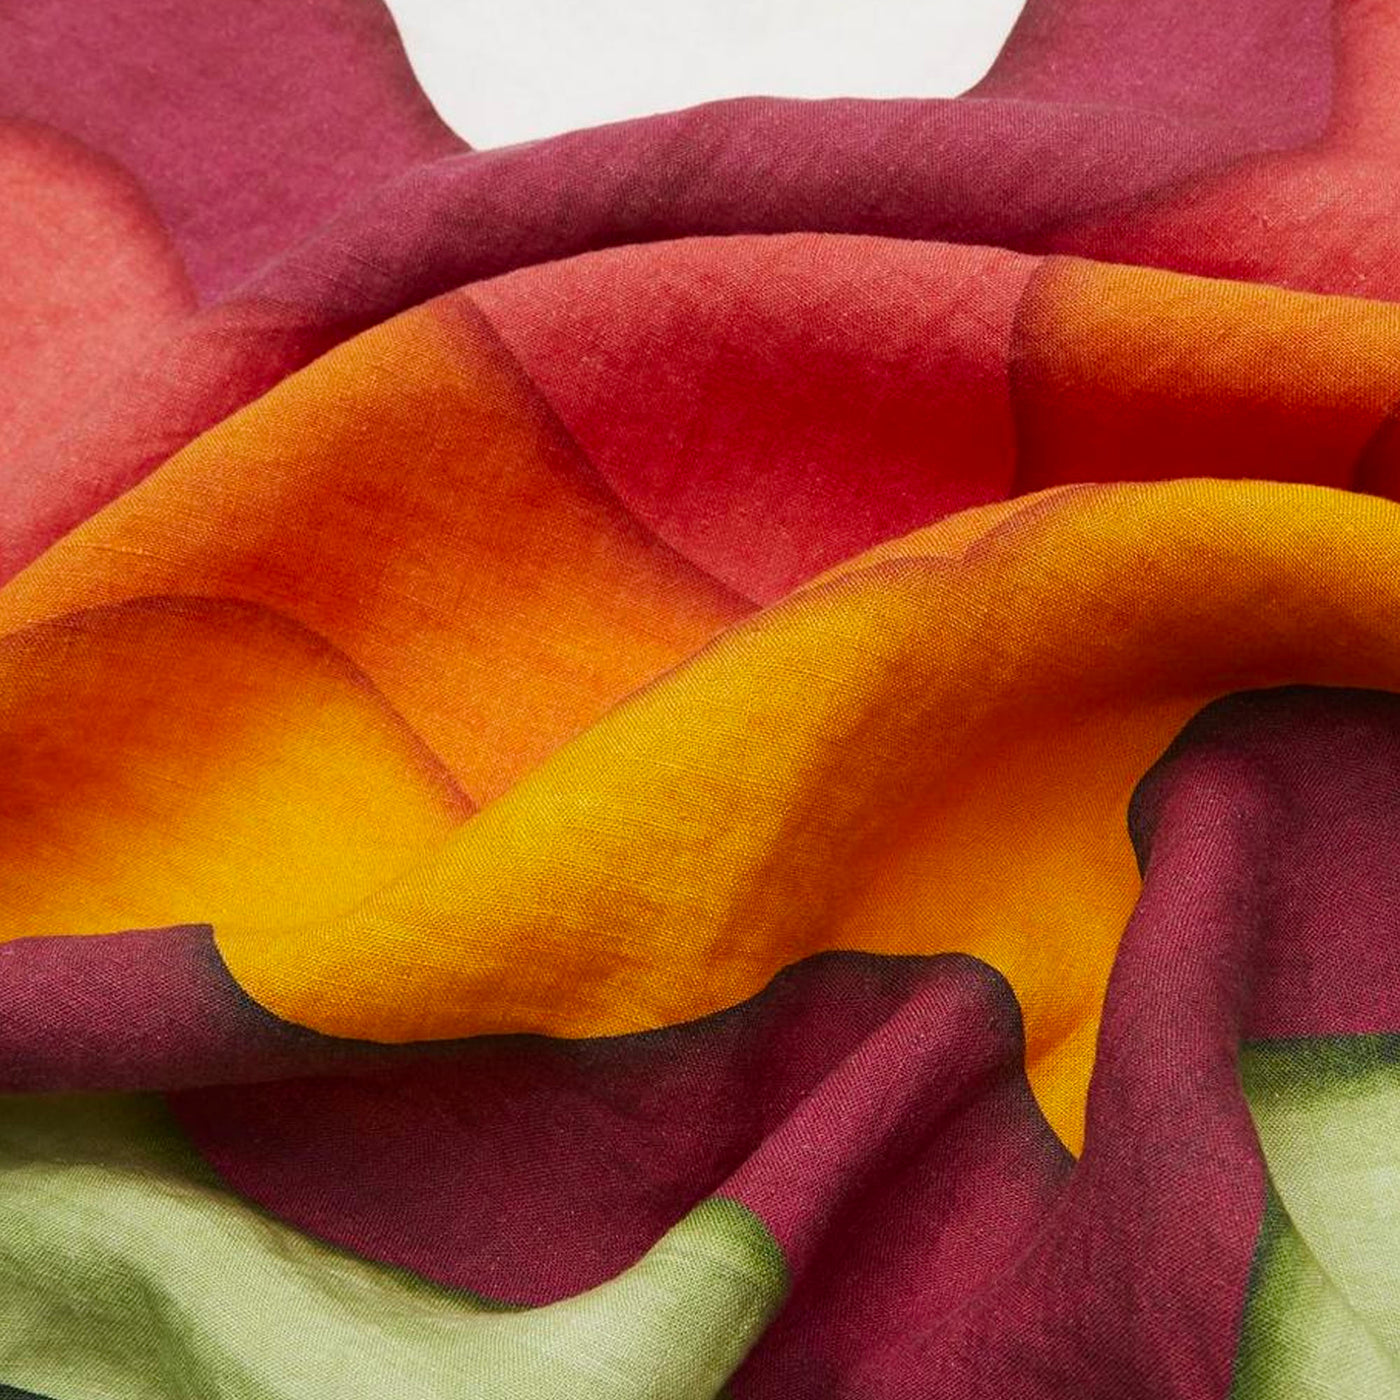 Winter Rainbow Linen Tablecloth , Summerill & Bishop, Table Cloths + Runners- Julia Moss Designs